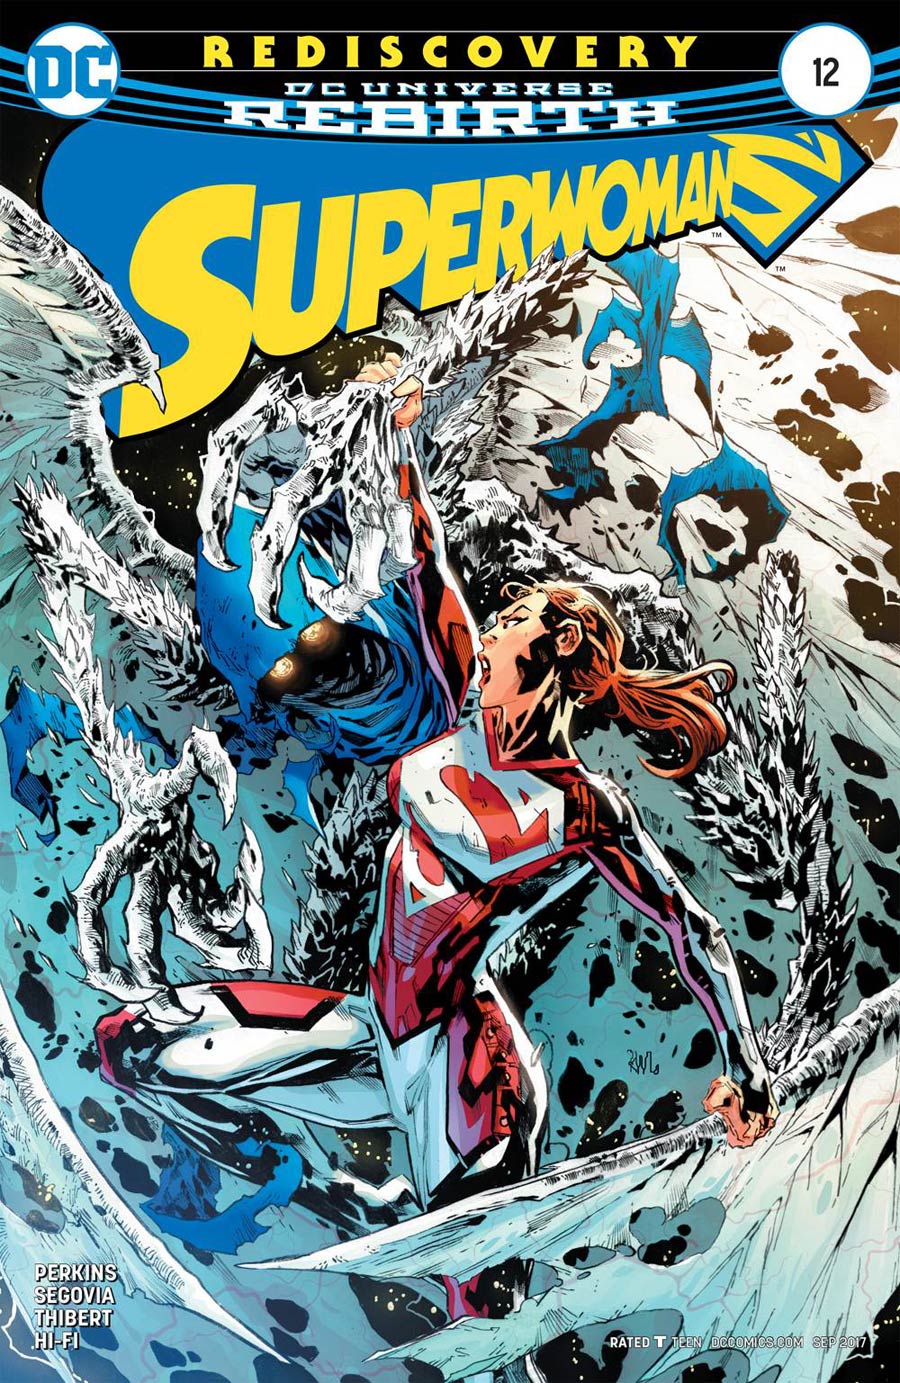 Superwoman #12